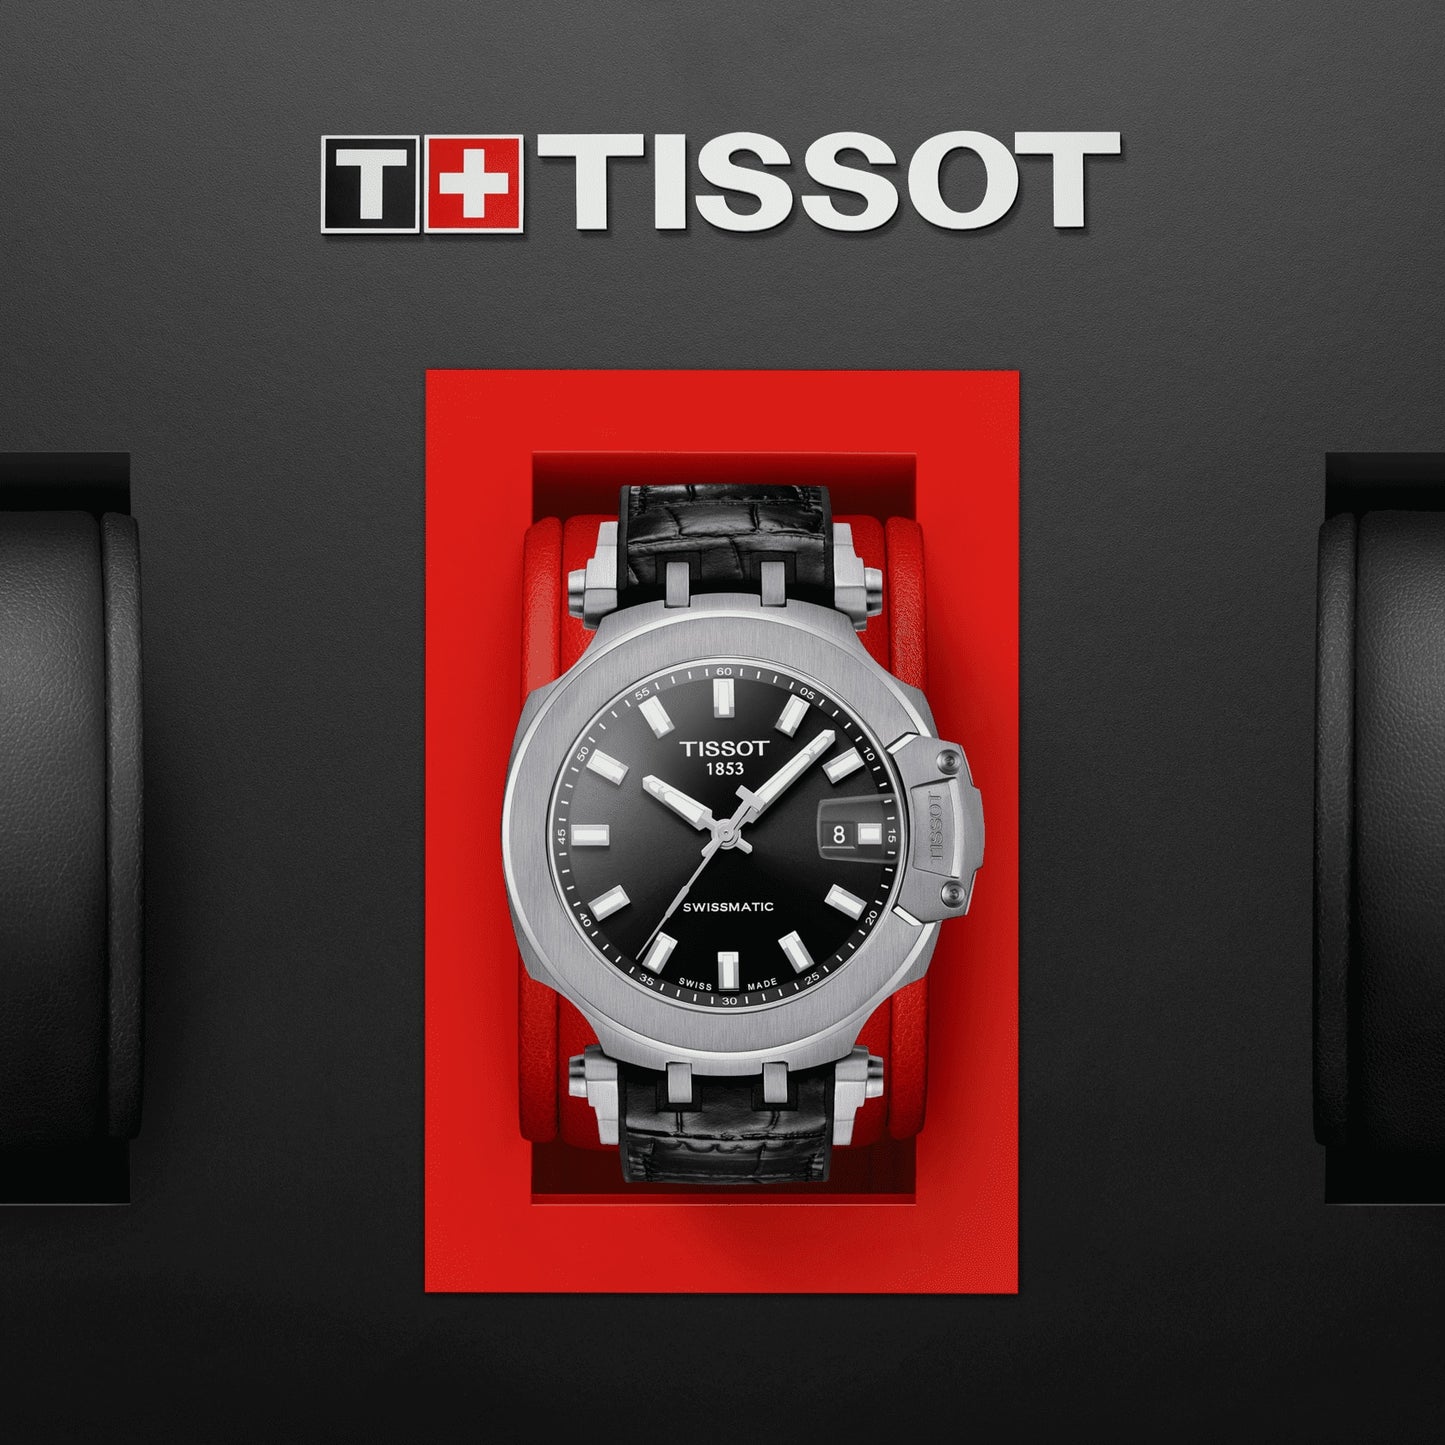 Tissot T-Race Swissmatic